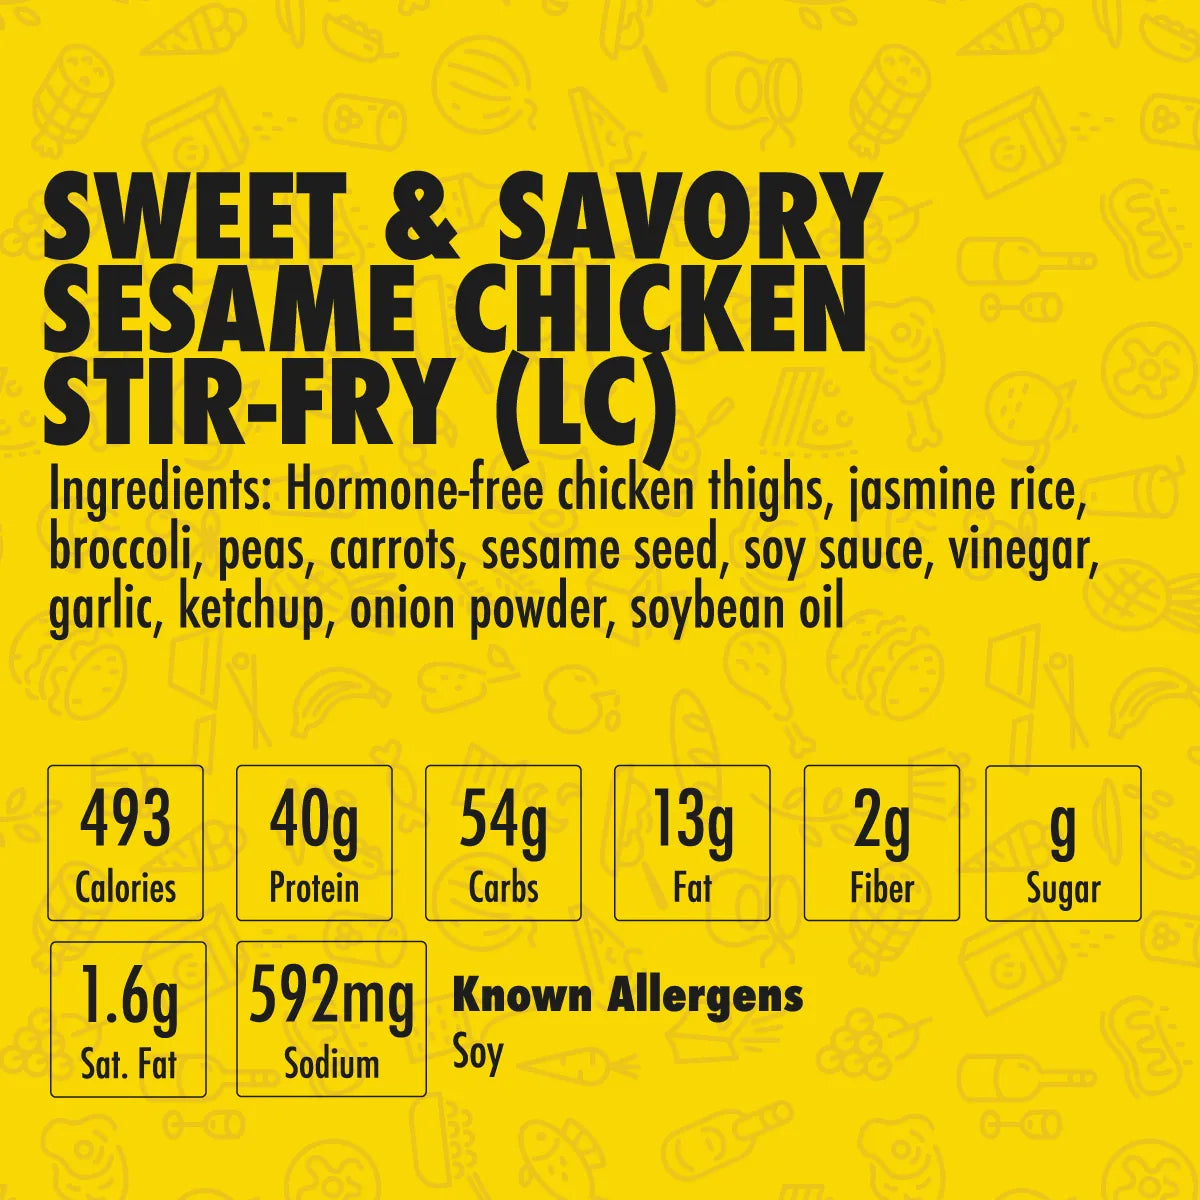 Sweet & Savory Sesame Chicken Stir-Fry - Low Carb